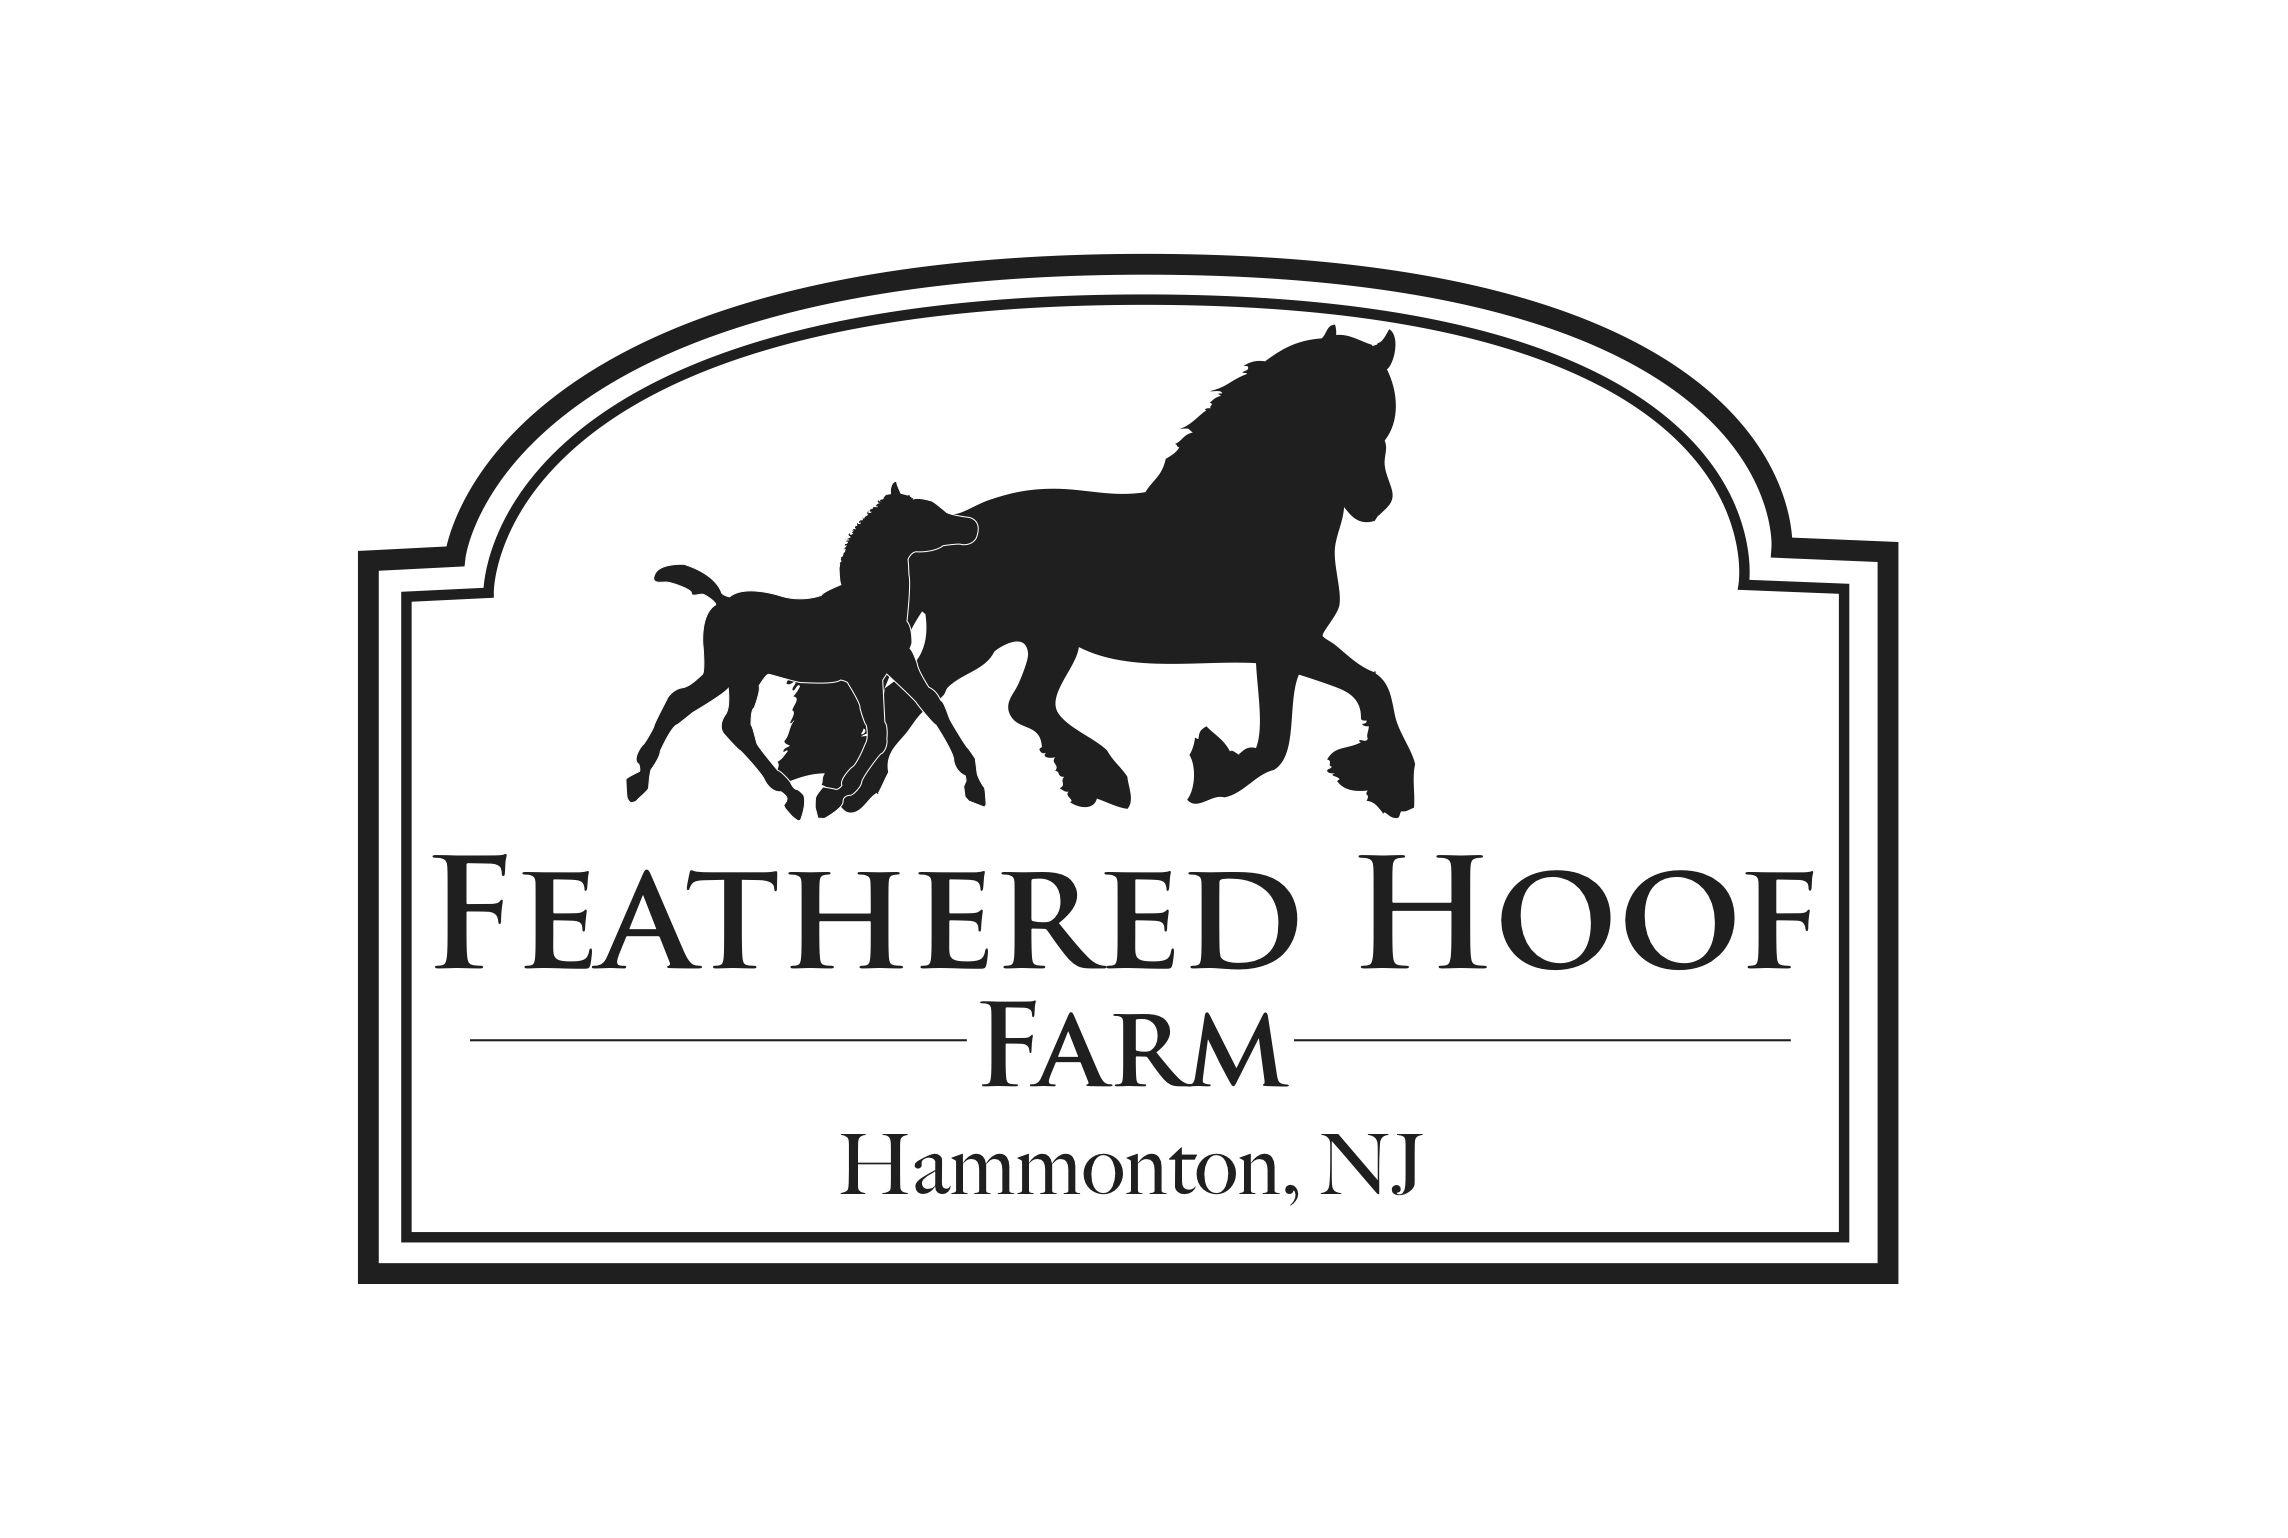 Horse Farm Logo - Feathered Hoof Farm Logo. It's Show Time!